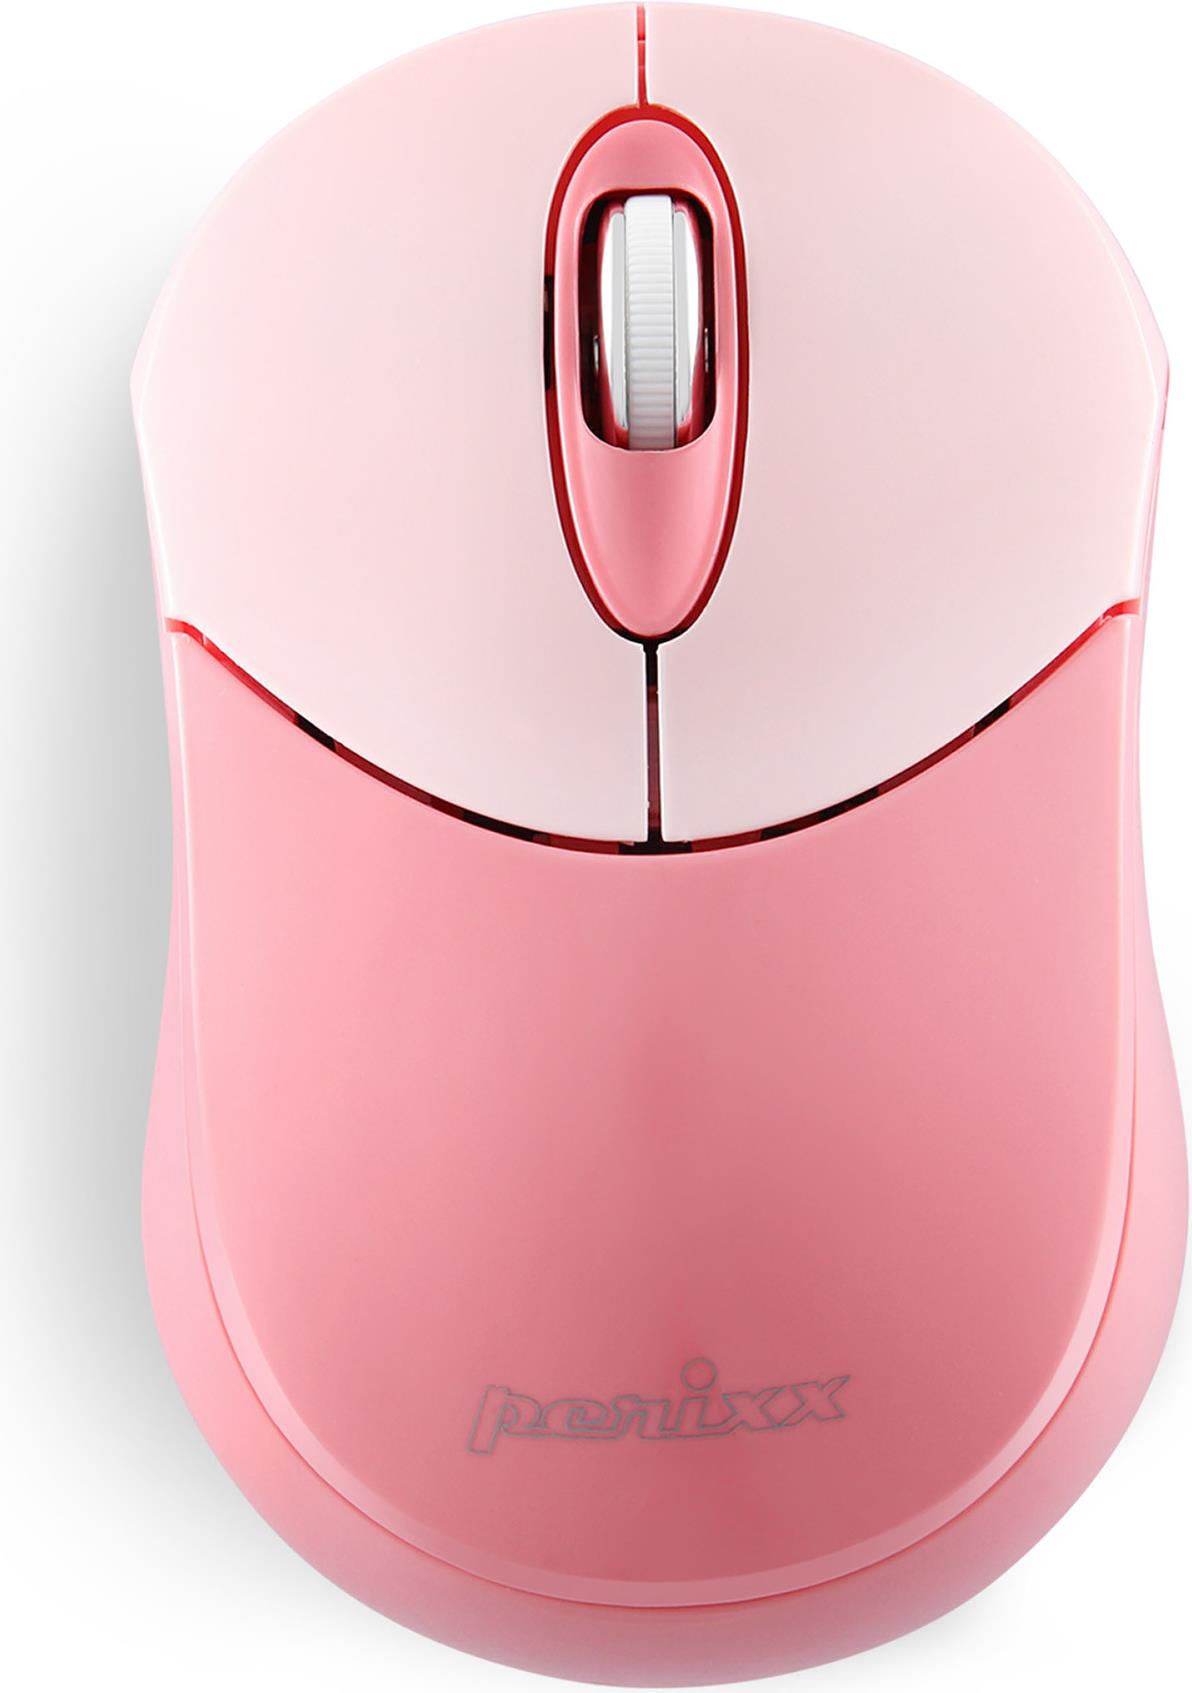 Perixx PERIMICE-802PK Bluetooth-Maus für PC und Tablet schnurlos pink (PERIMICE-802PK)